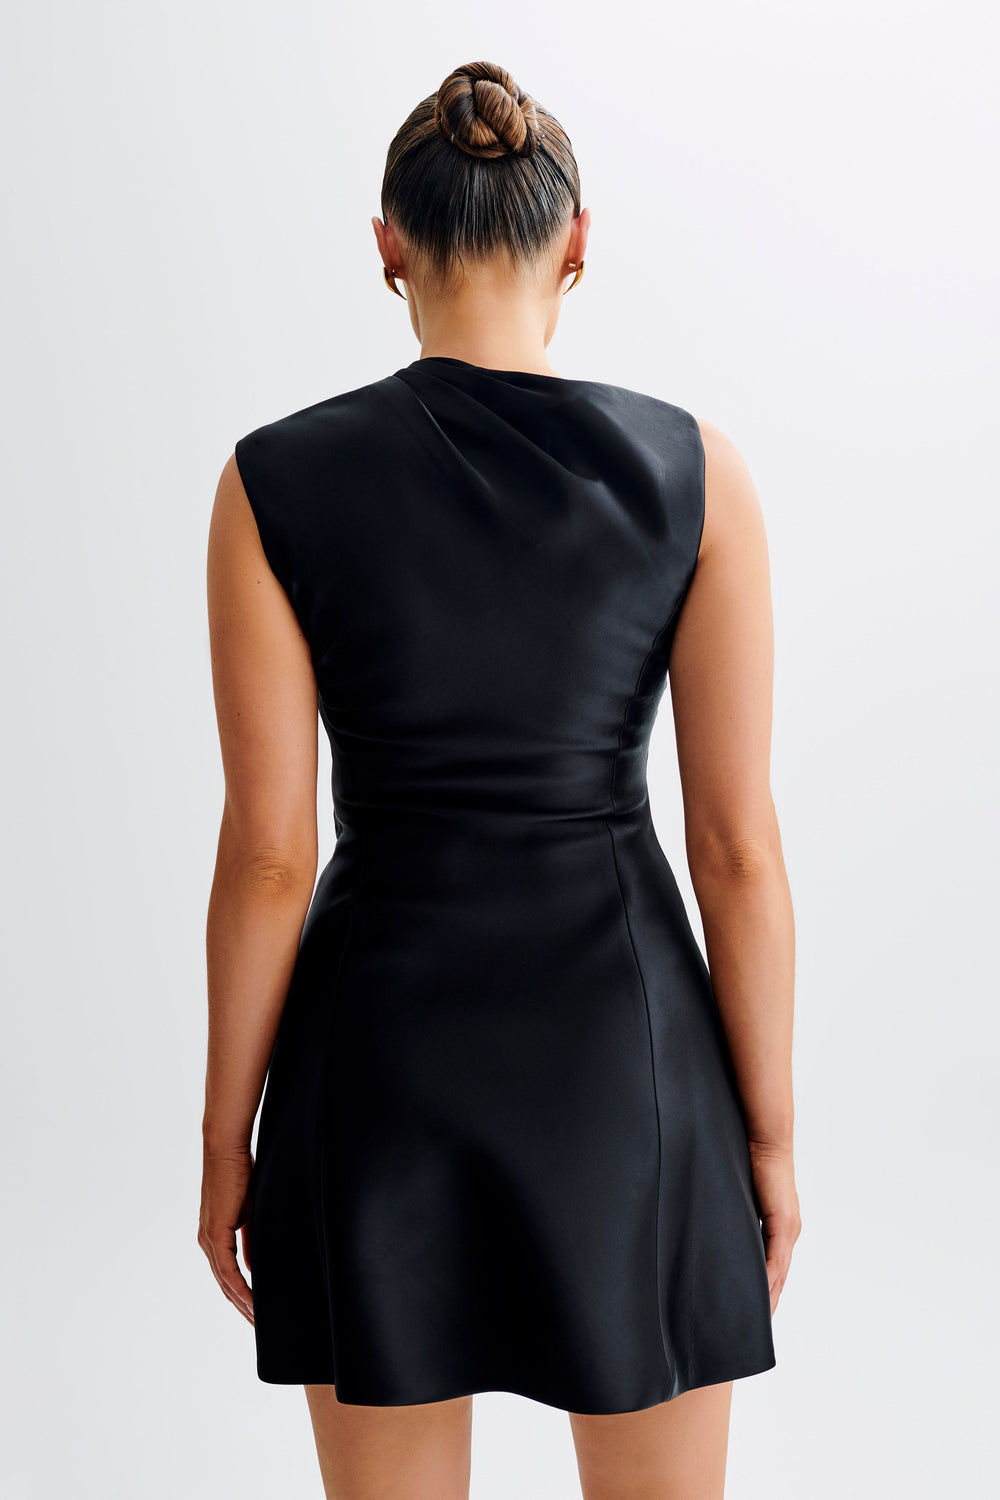 Granger Satin Structured Mini Dress - Black